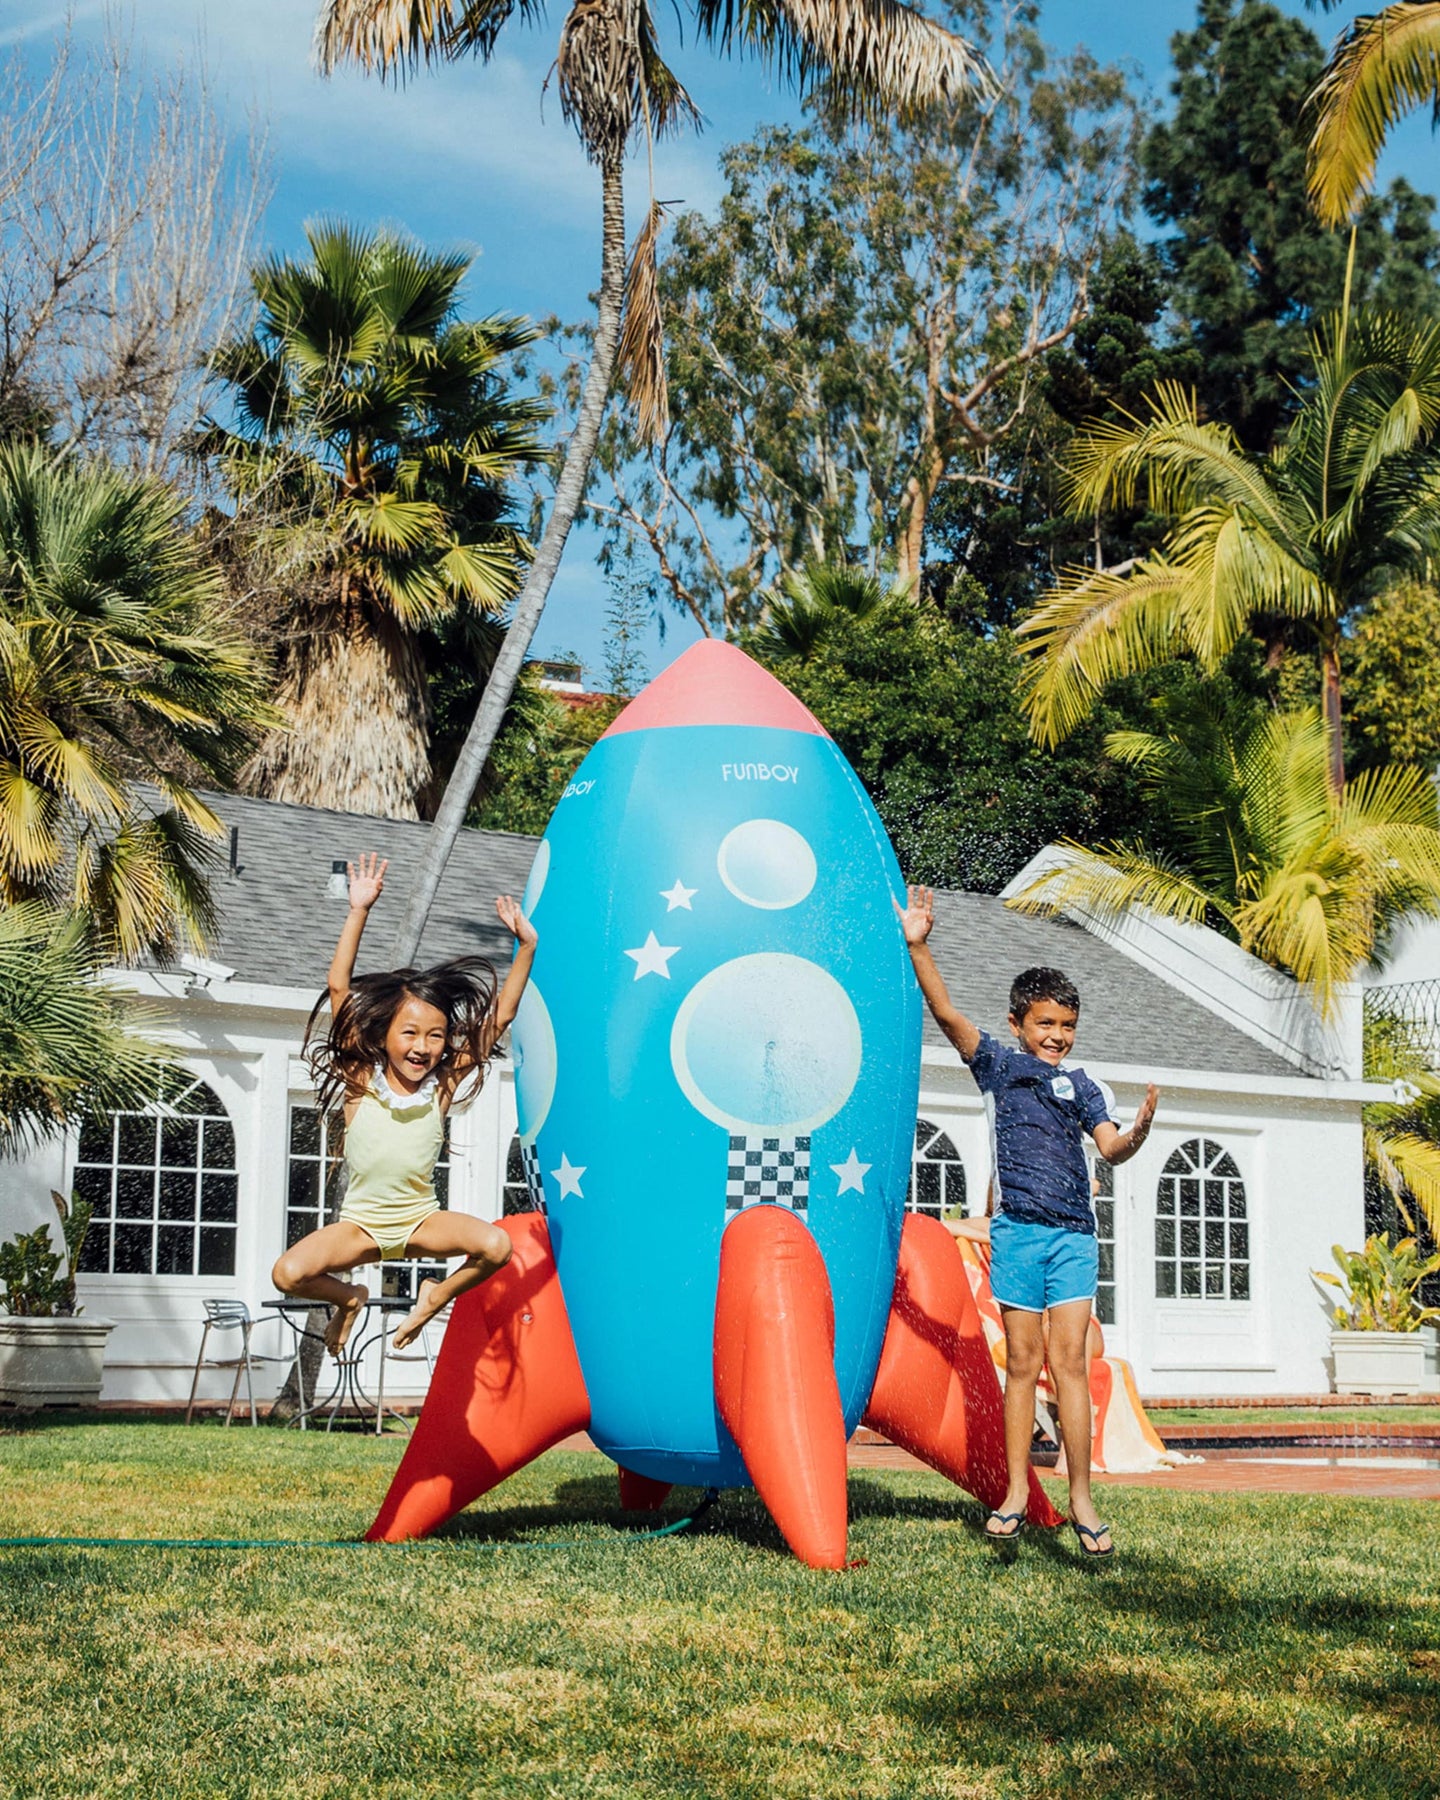 Backyard Kids Rocket Ship Sprinkler by FUNBOY